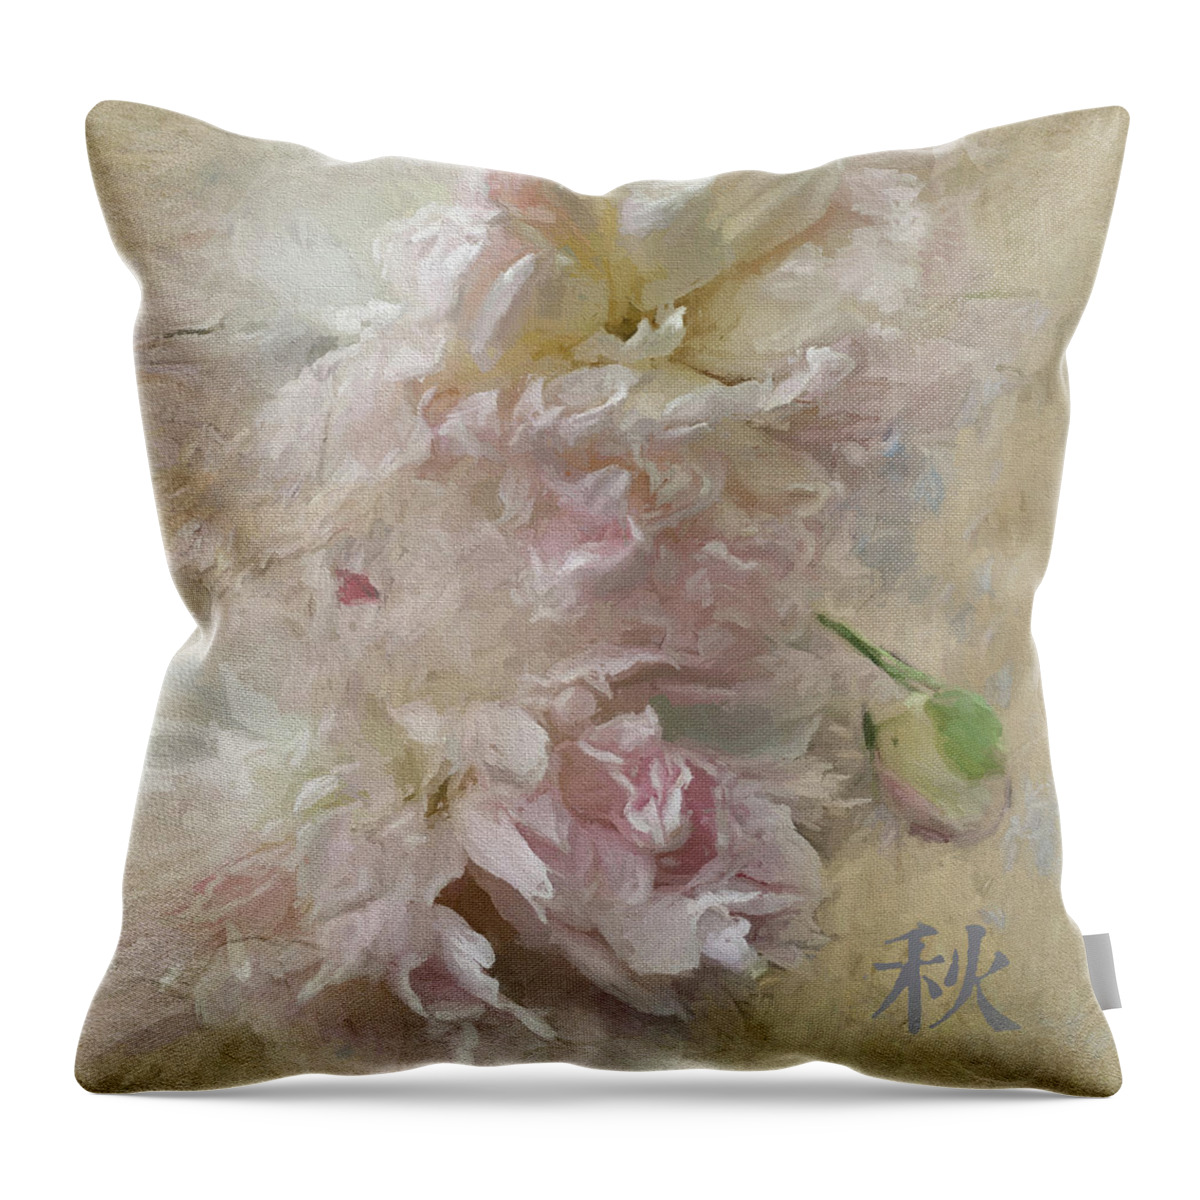 Floral Throw Pillow featuring the photograph Hana by Karen Lynch